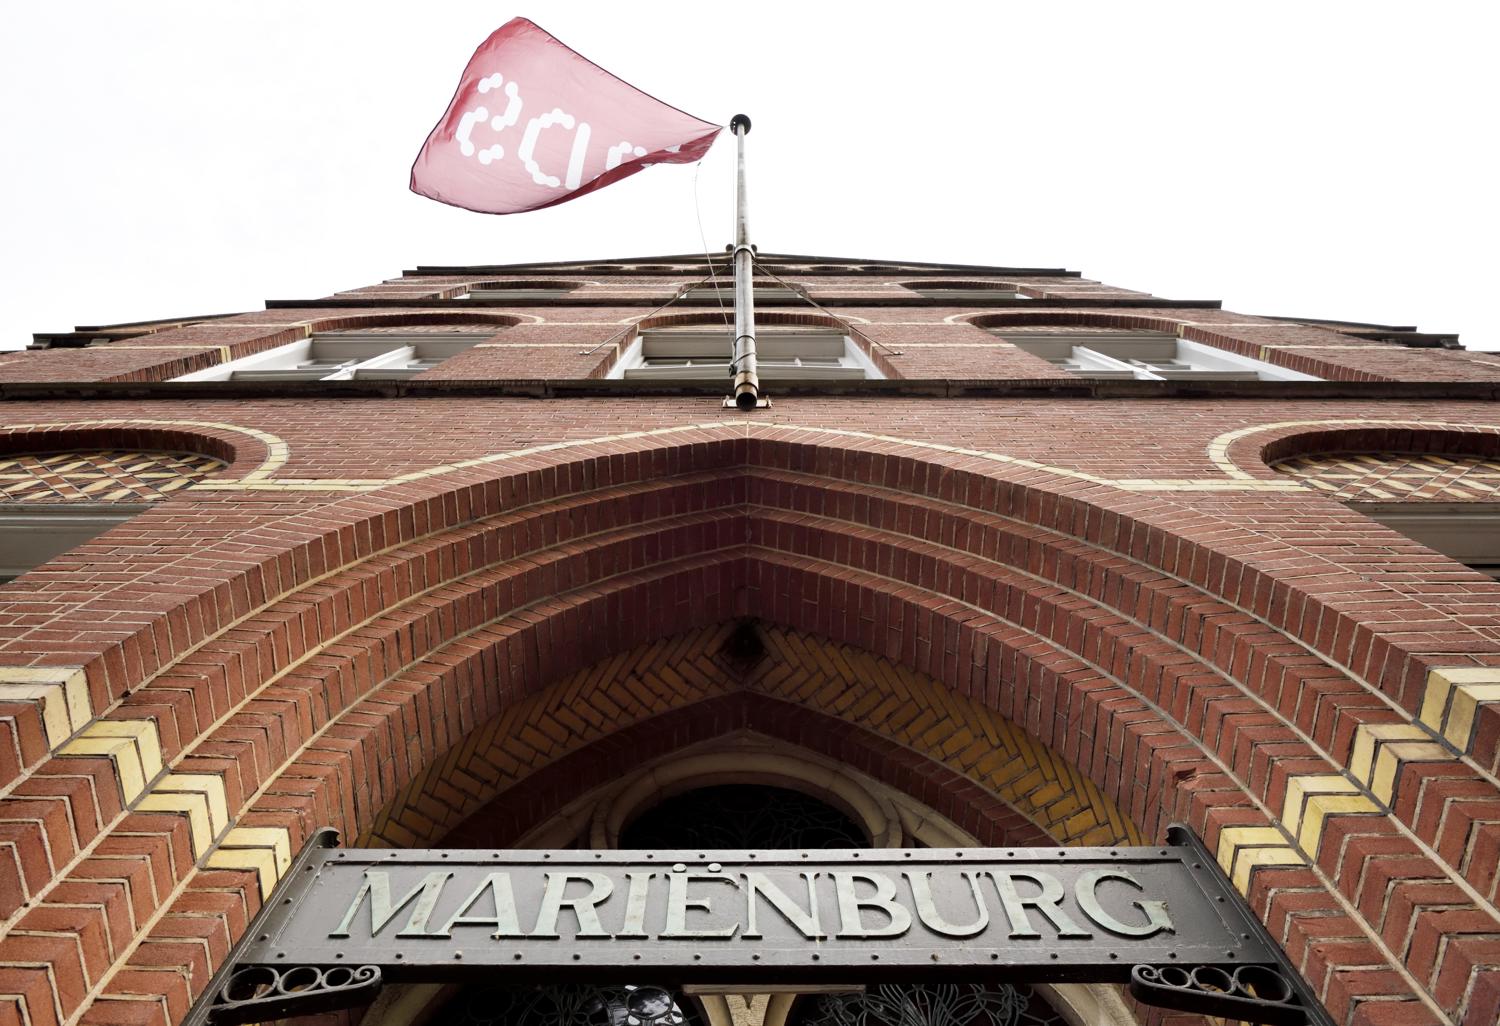 JADS, universiteit voor data science, is gevestigd in voormalig klooster Mariënburg | Brabant Brand Box